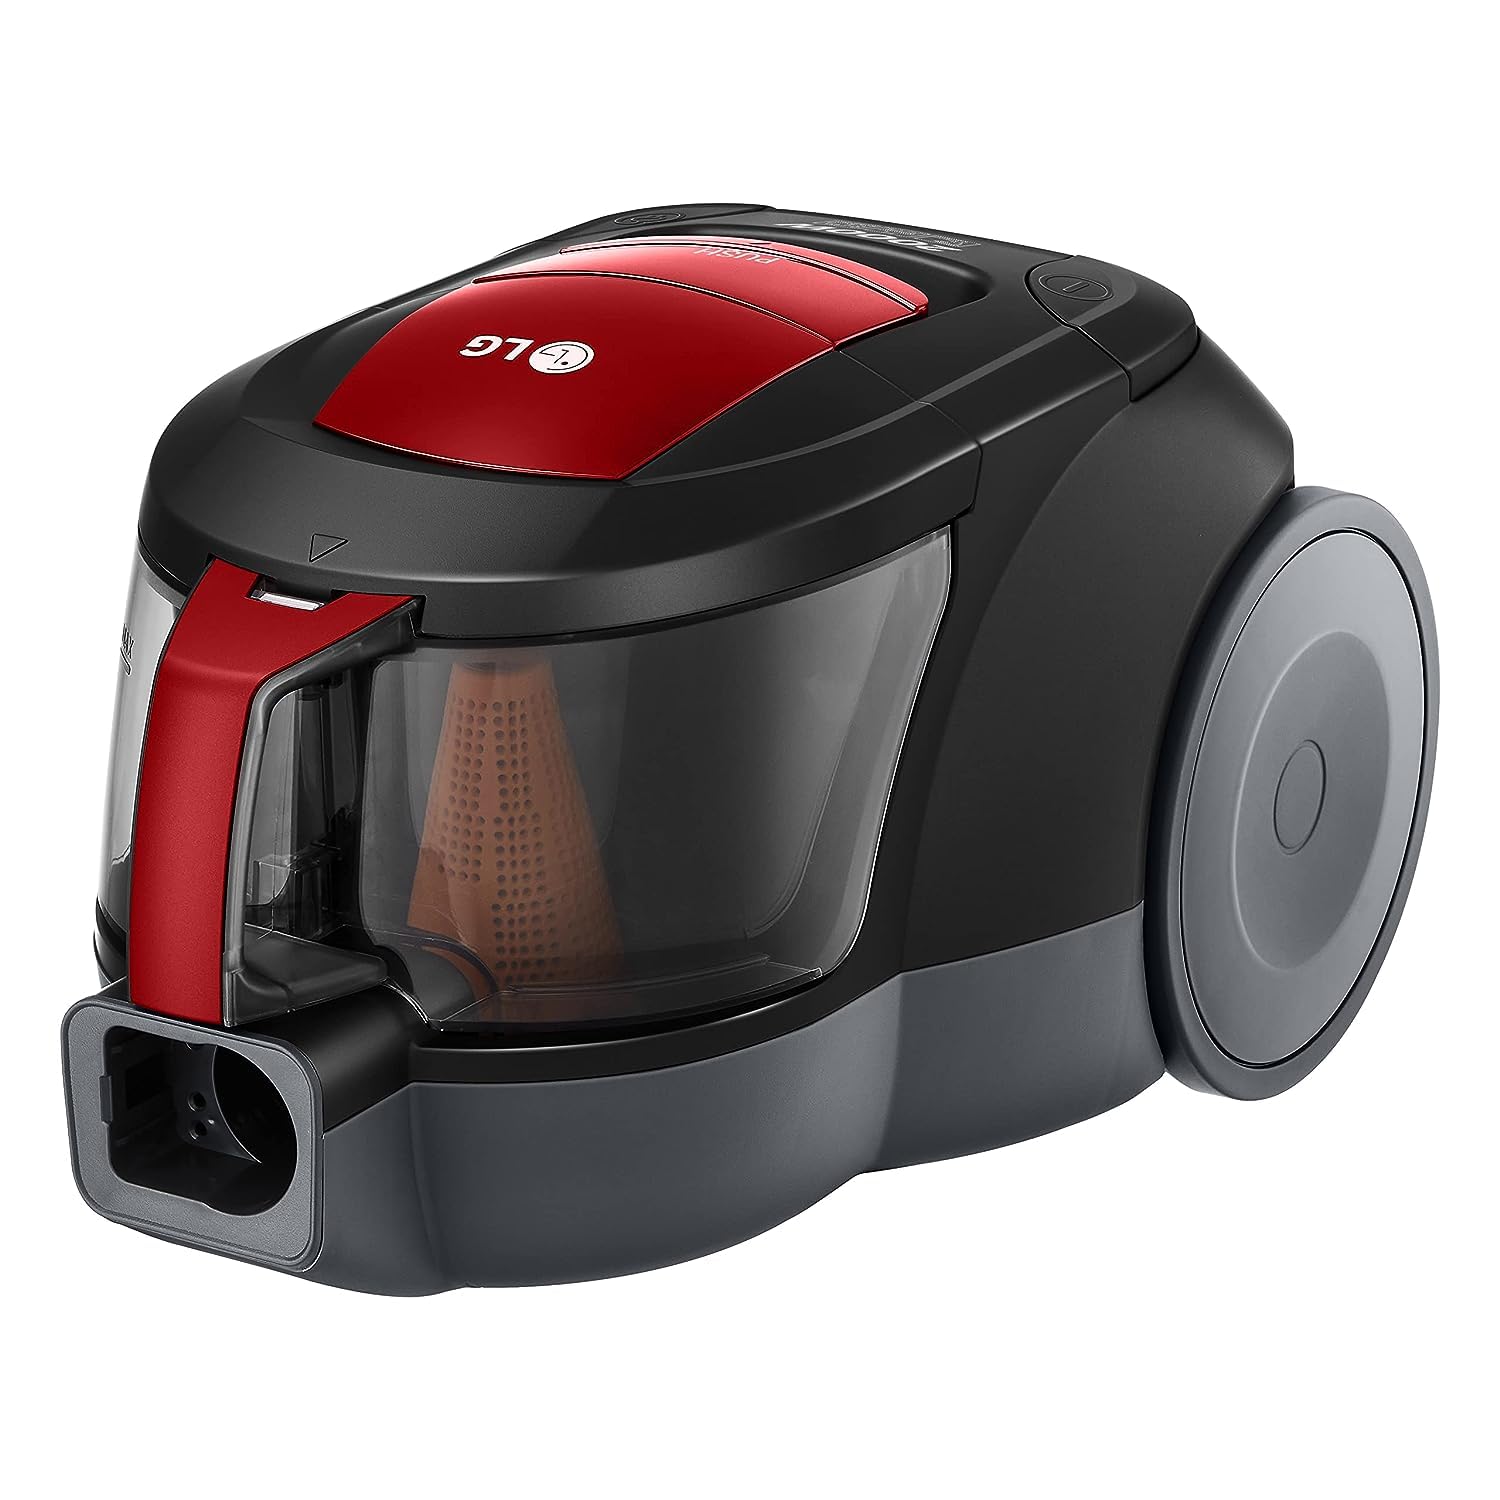 LG Bagless Vacuum Cleaner, 1.3 Liter Dust Capacity, Long Lasting Suction Power, 2000 Watt, Pearl Sparkle Red إل جي مكنسة كهربائية بدون كيس سعة 1.3 لتر من الغبار، قوة شفط تدوم طويلا، 2000 واط، احمر لؤلؤي